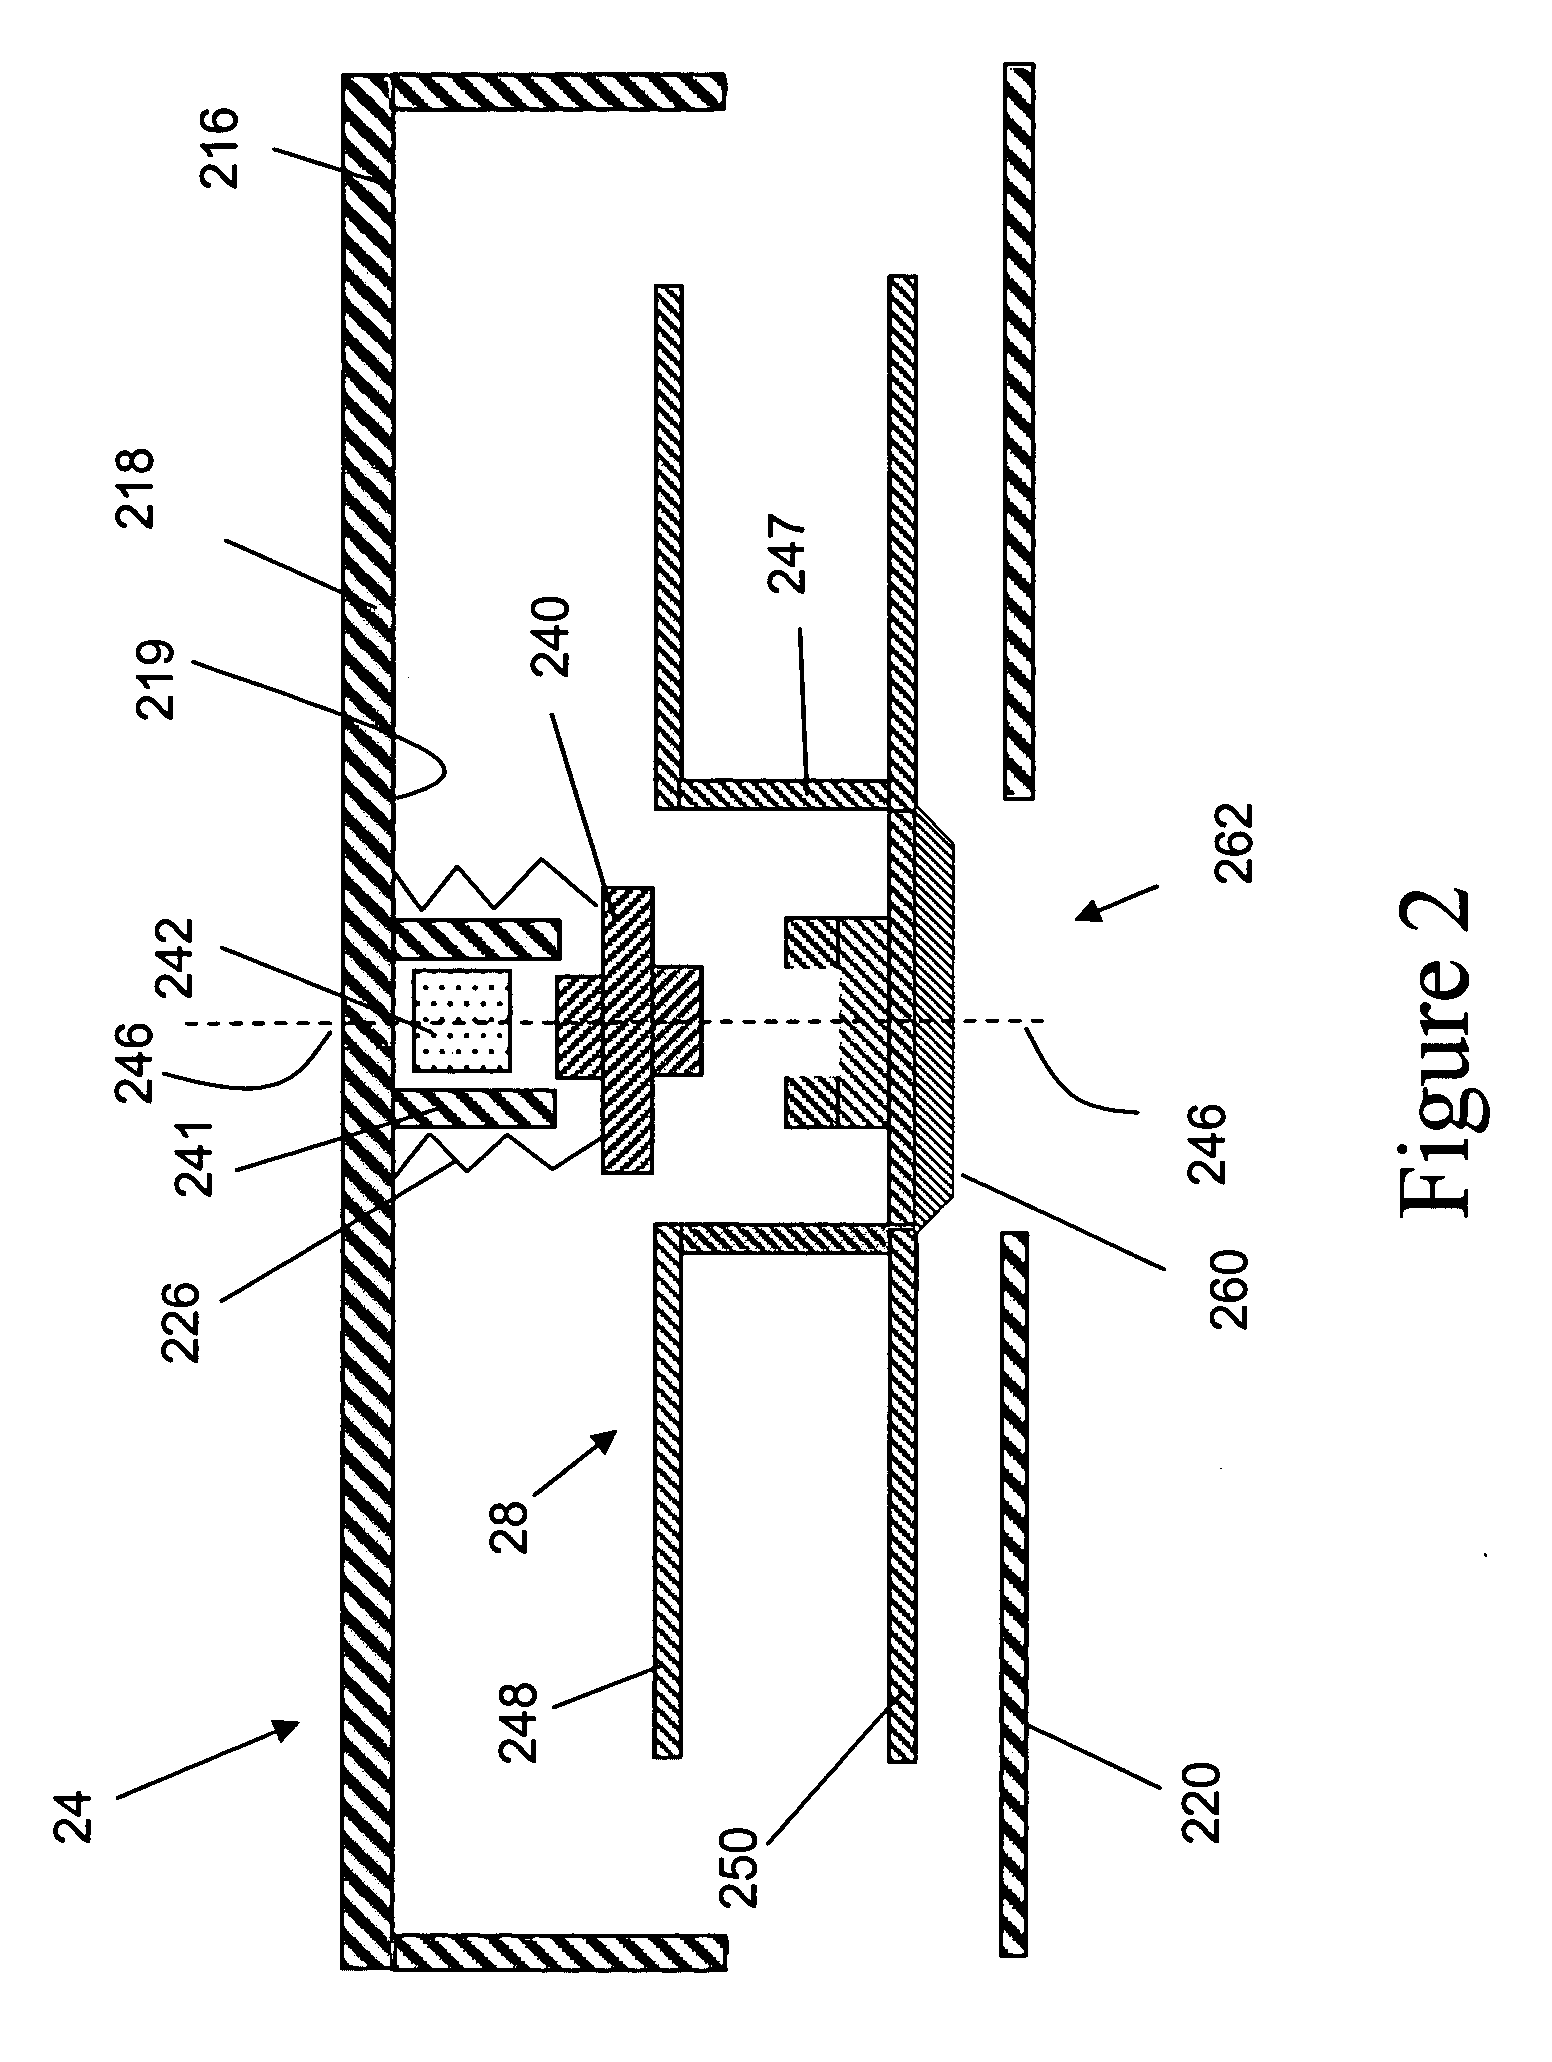 Media cartridge having reel suspension system and method of manufacture